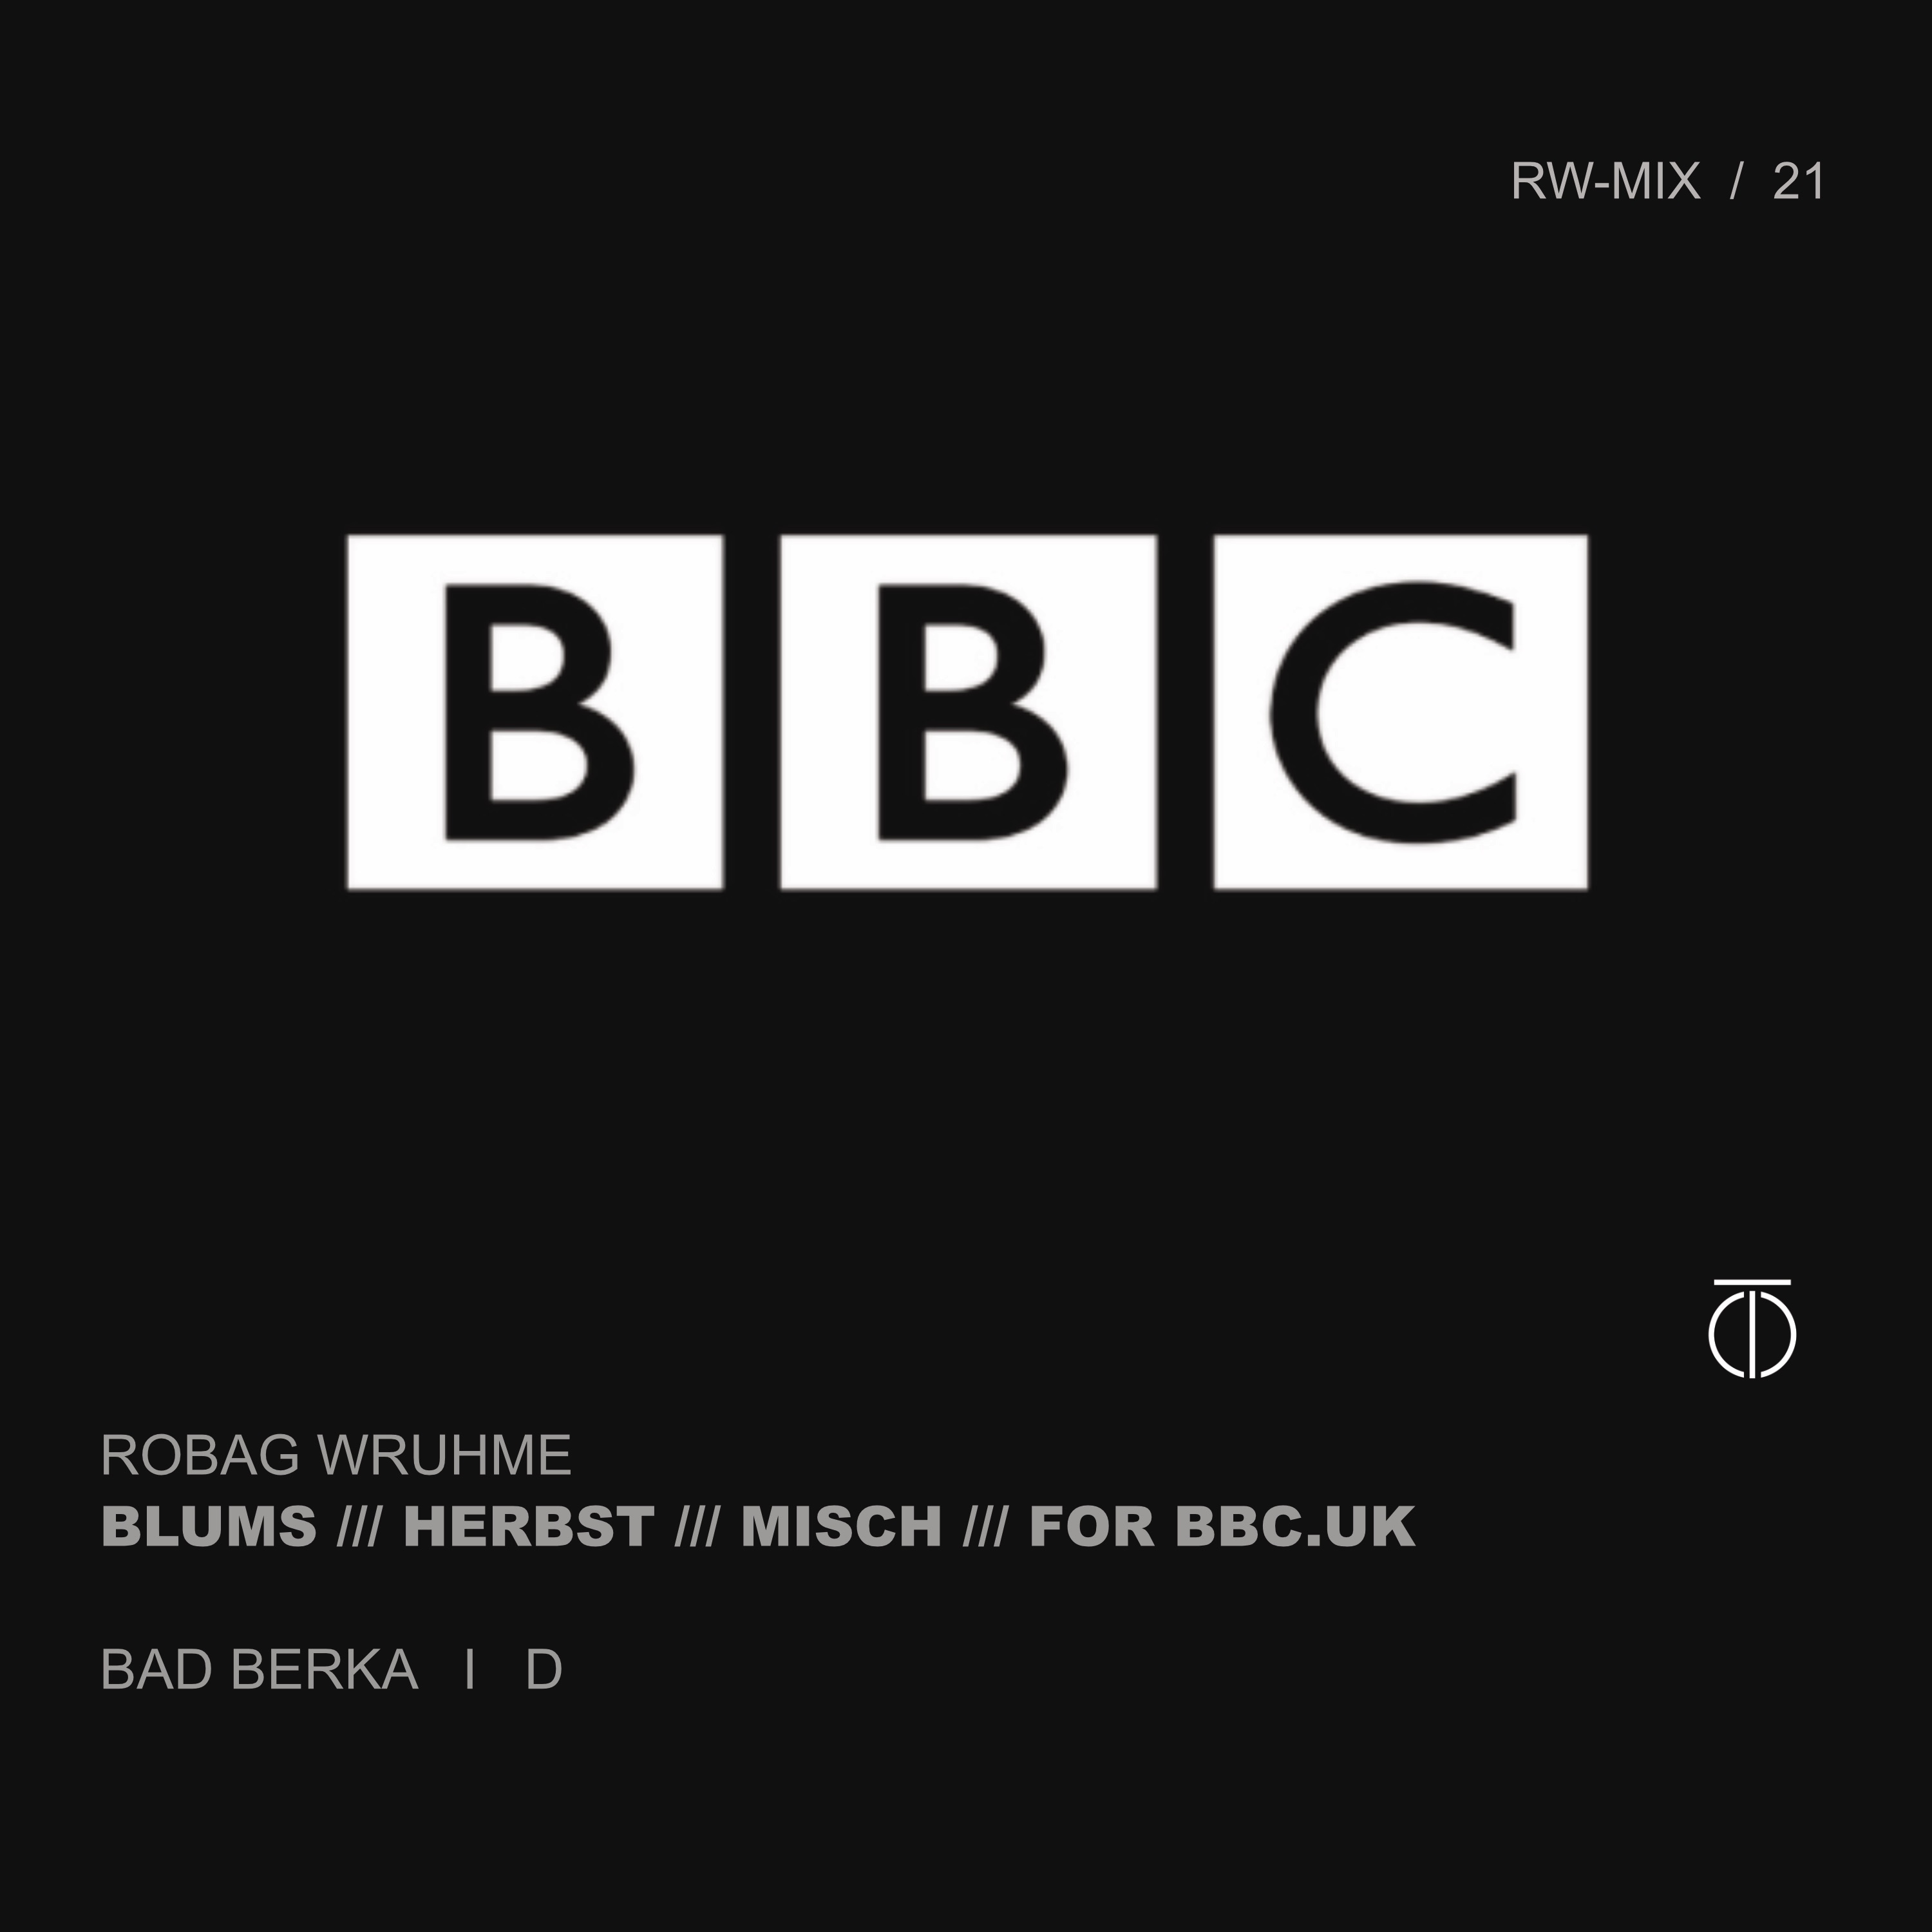 Download BBC RADIO - ROBAG WRUHME MIX 2021